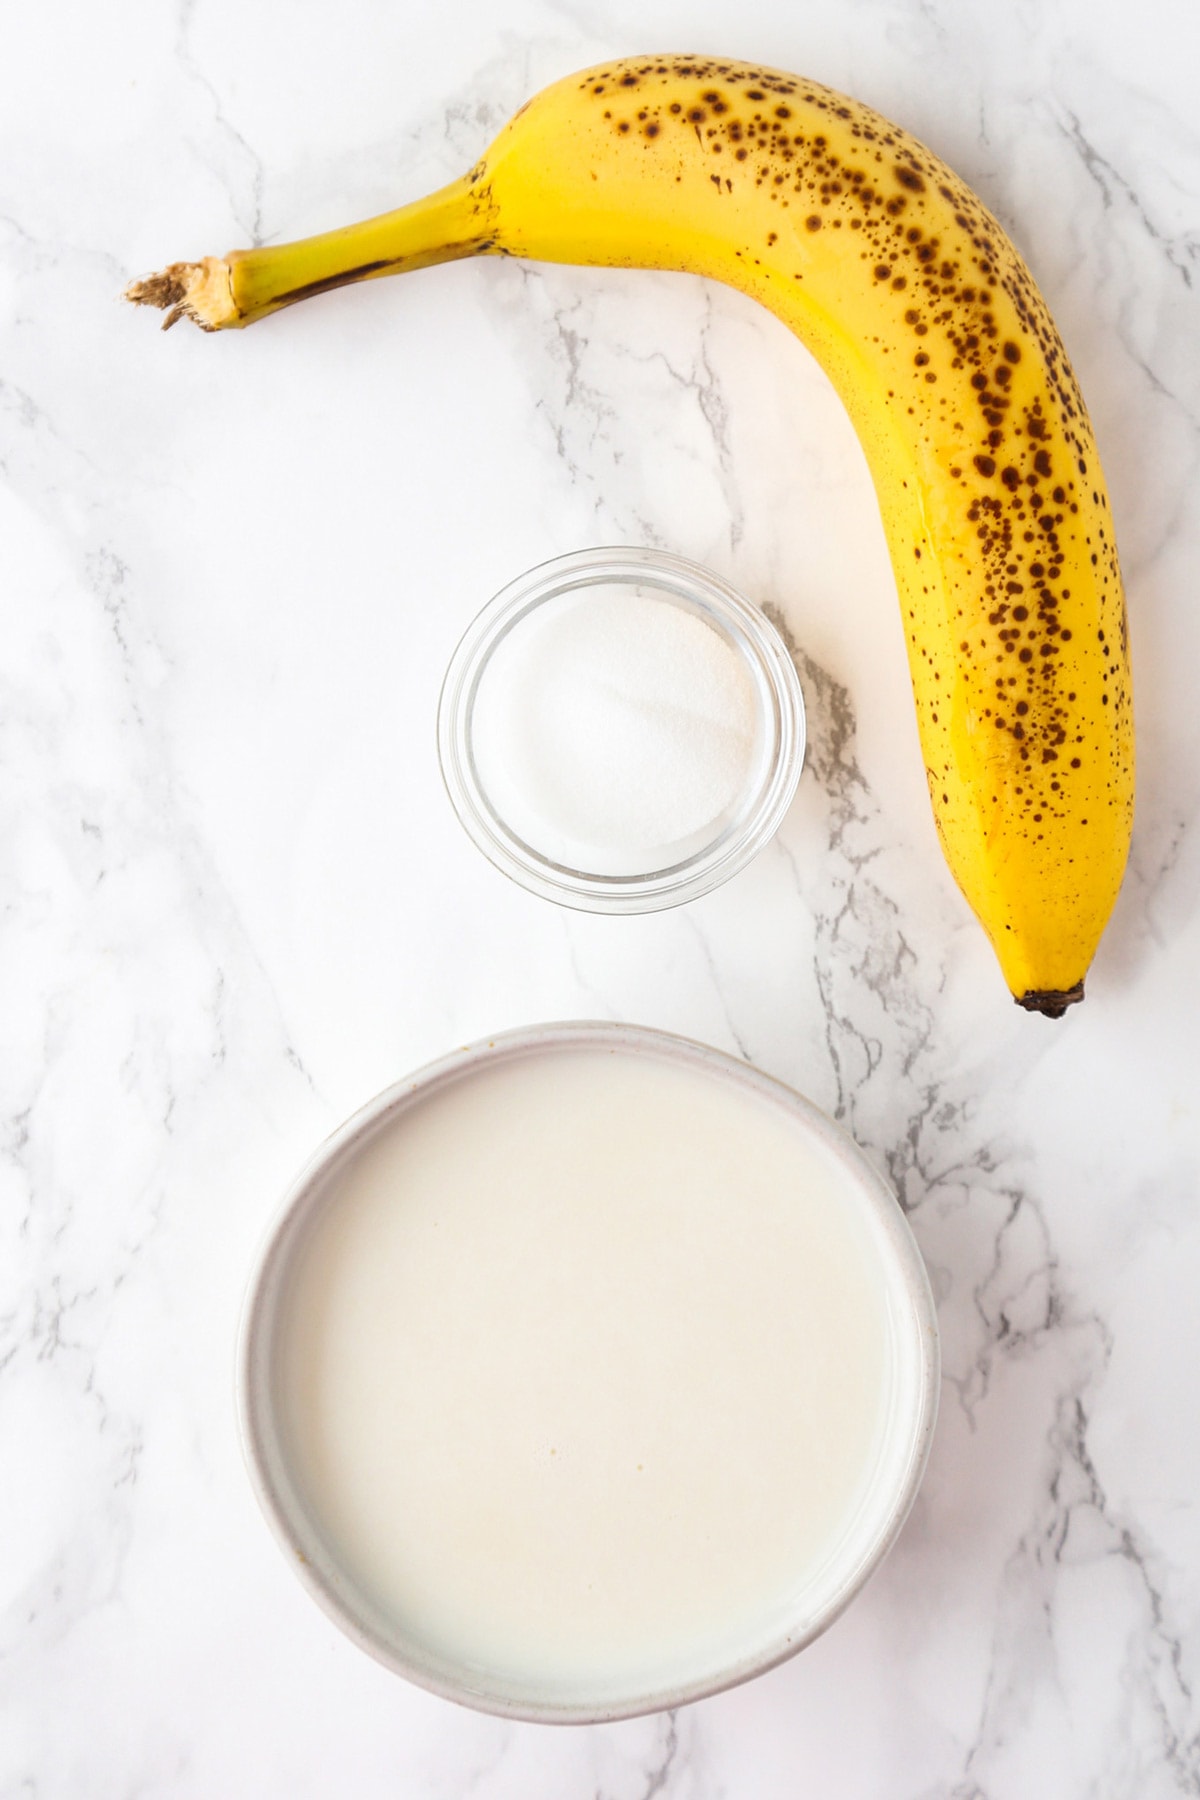 ingredients for banana milk - banana yuu